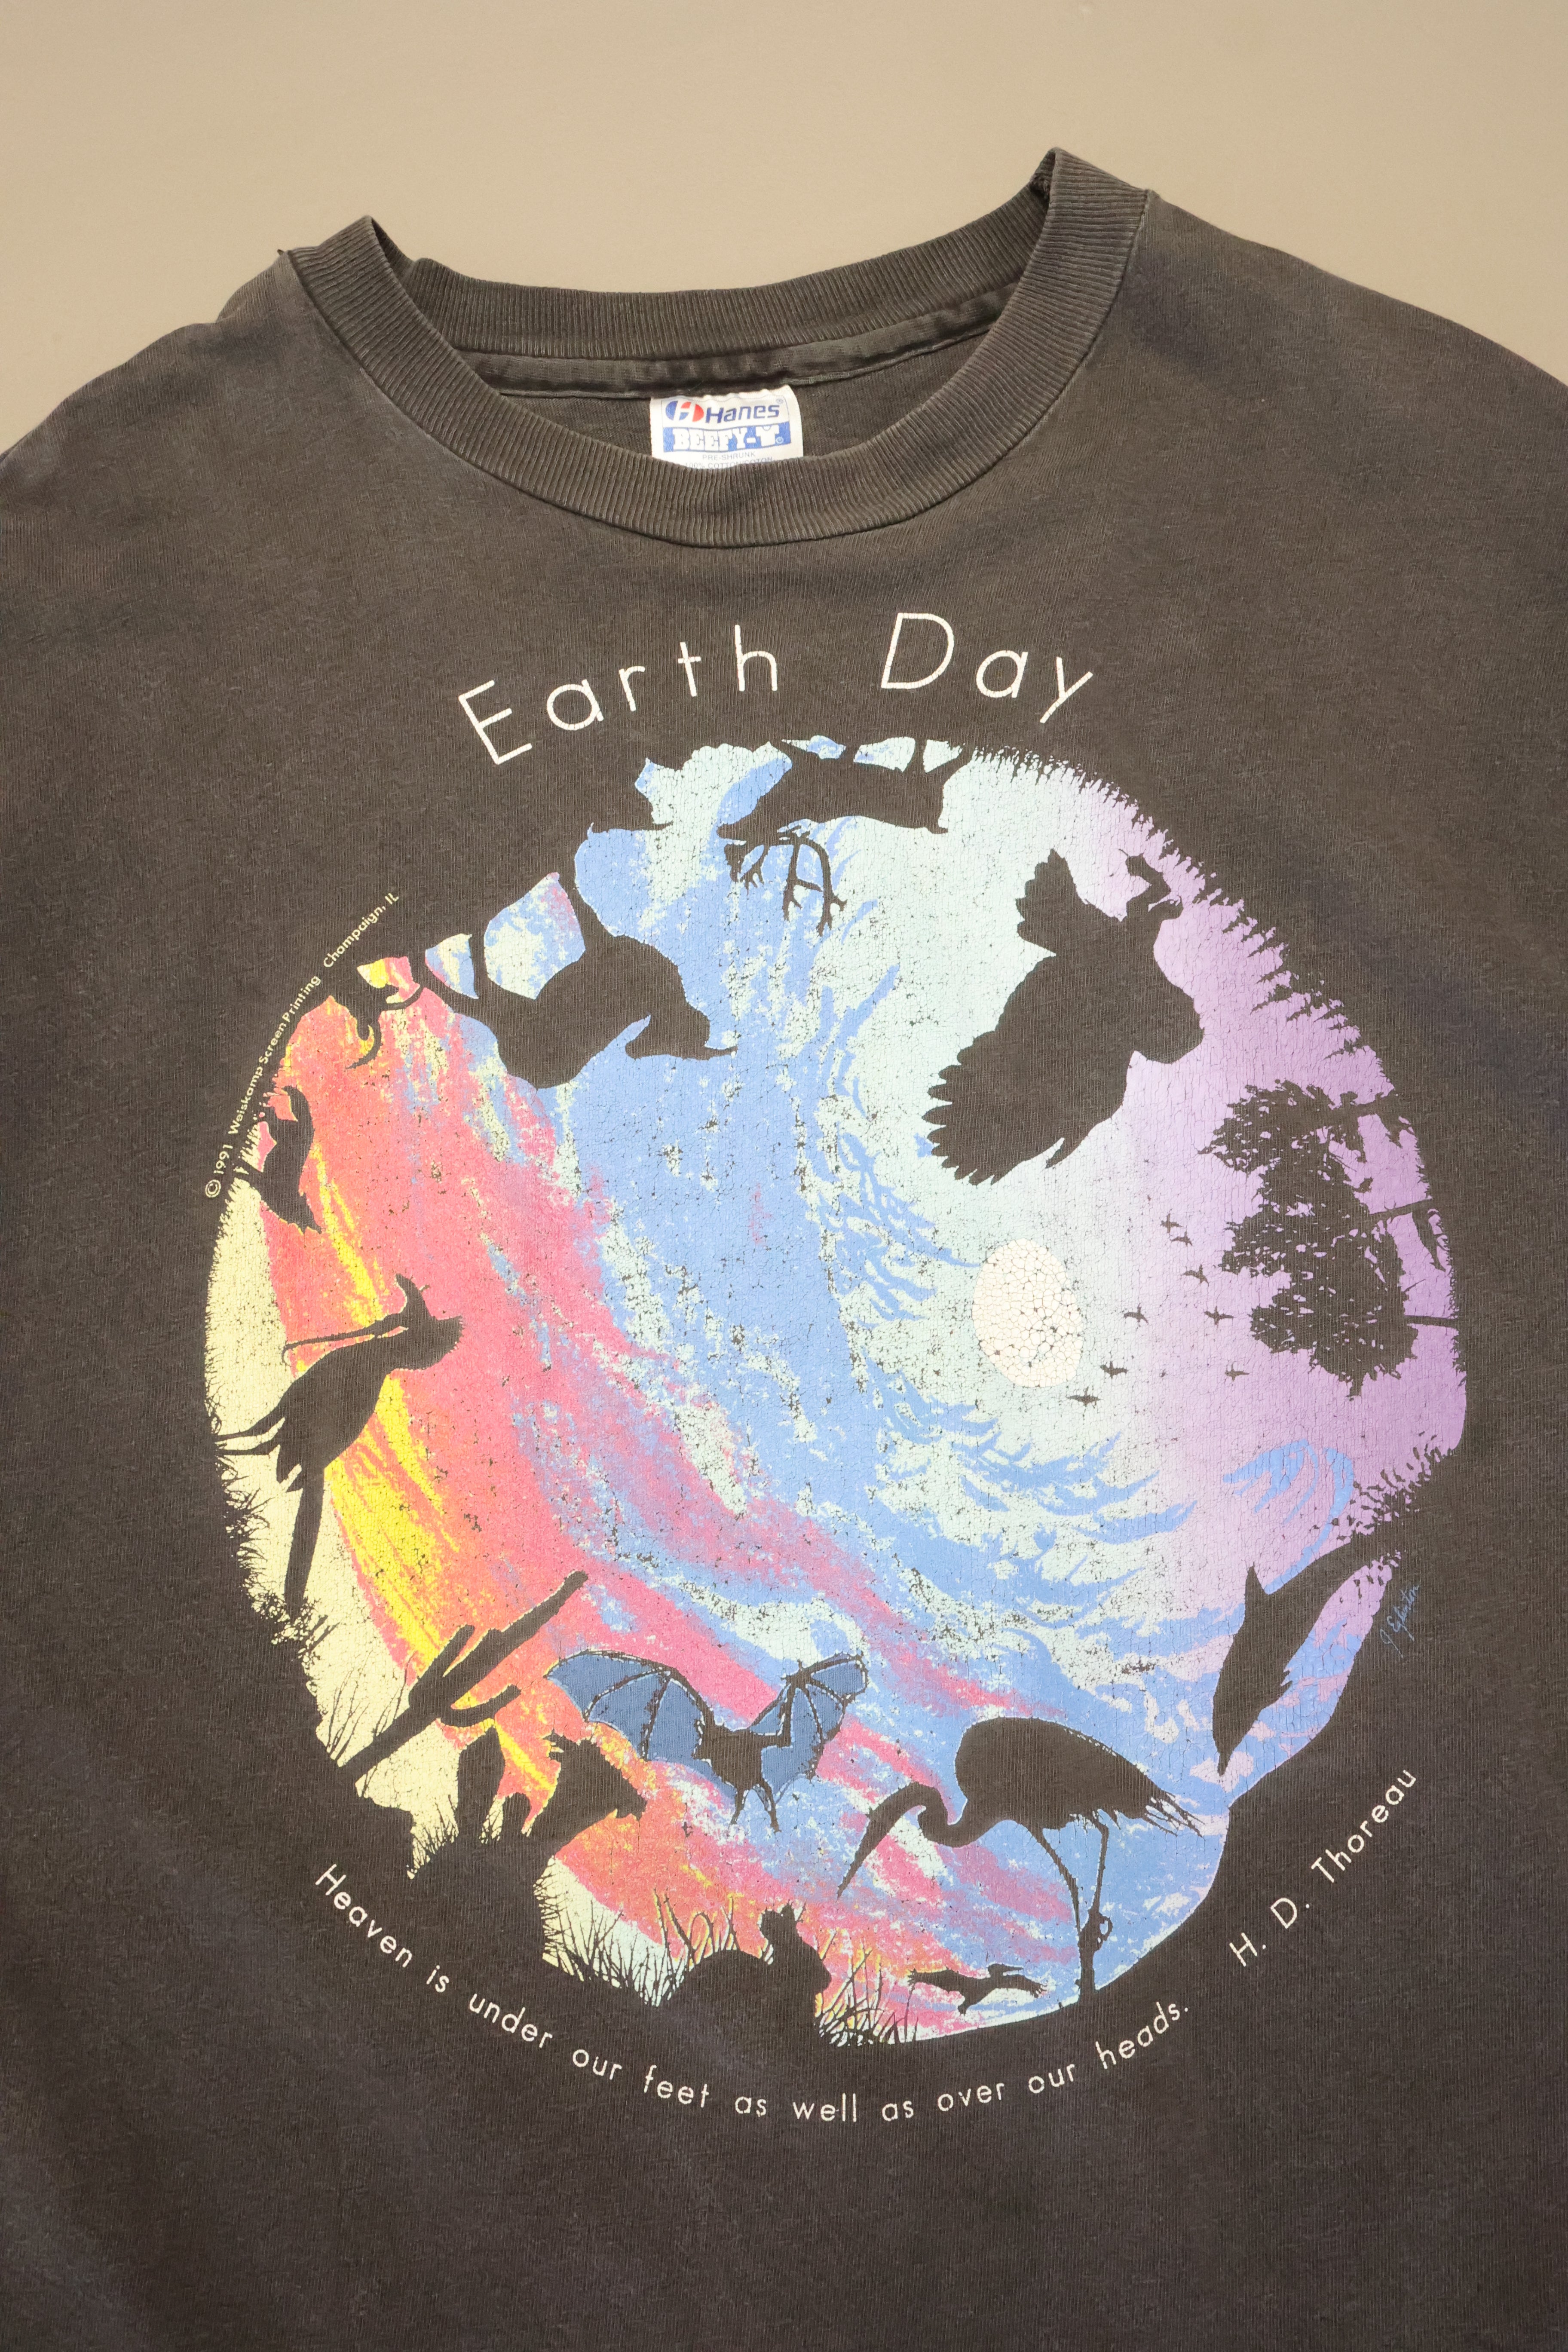 90's print t-shirt "EARTH DAY"